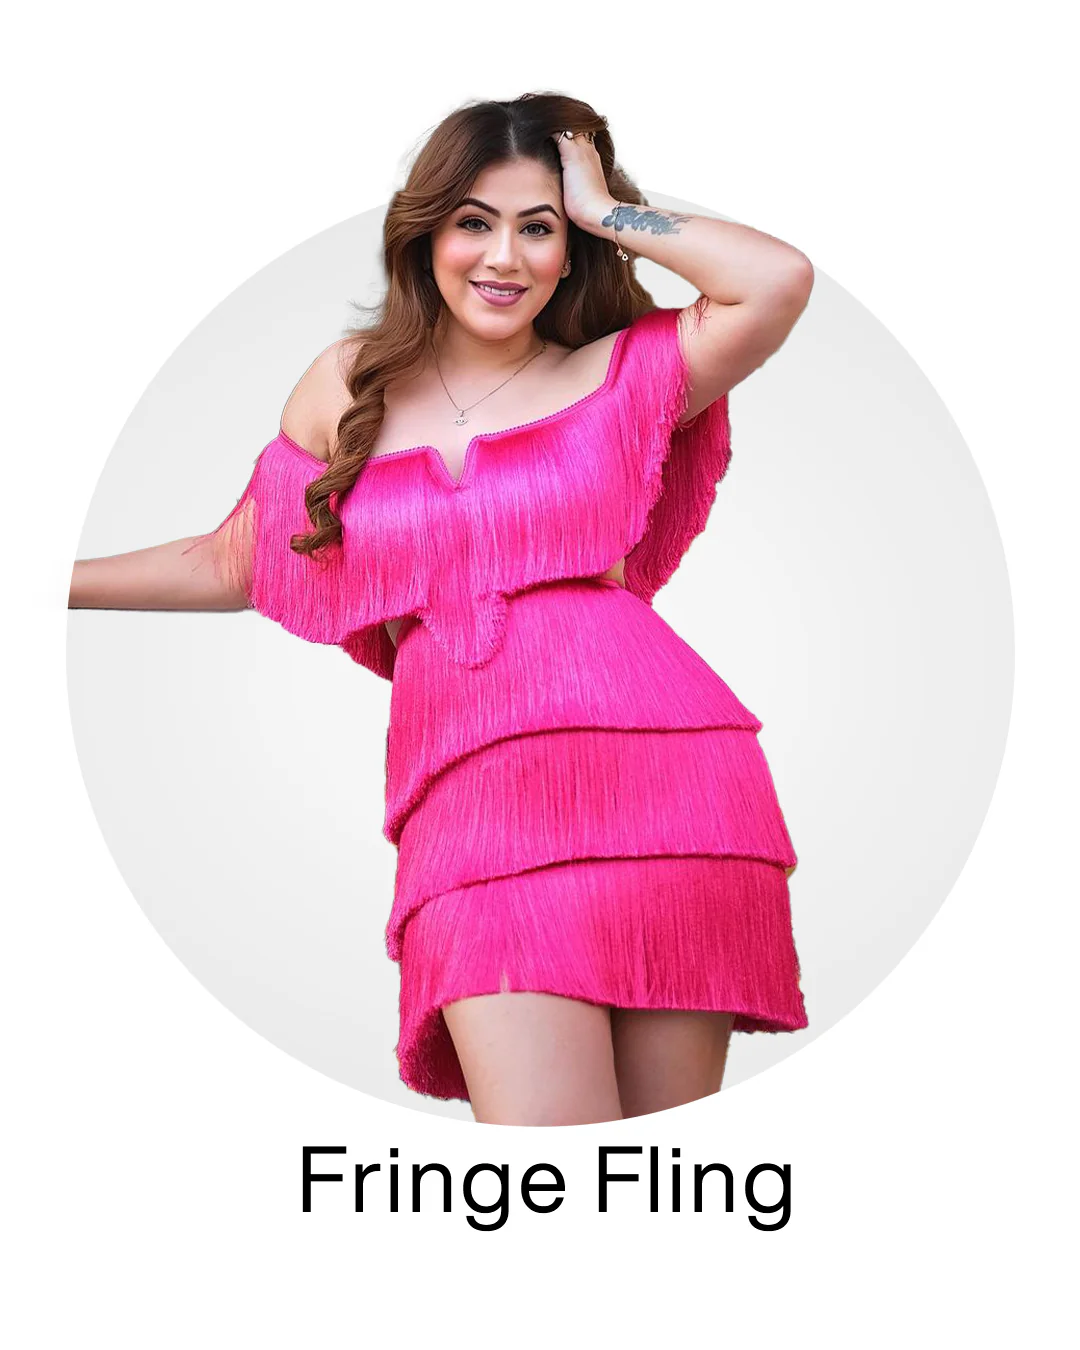 fringe_fling_0d5a1d73-c3b0-4296-8267-fb6c93acea76